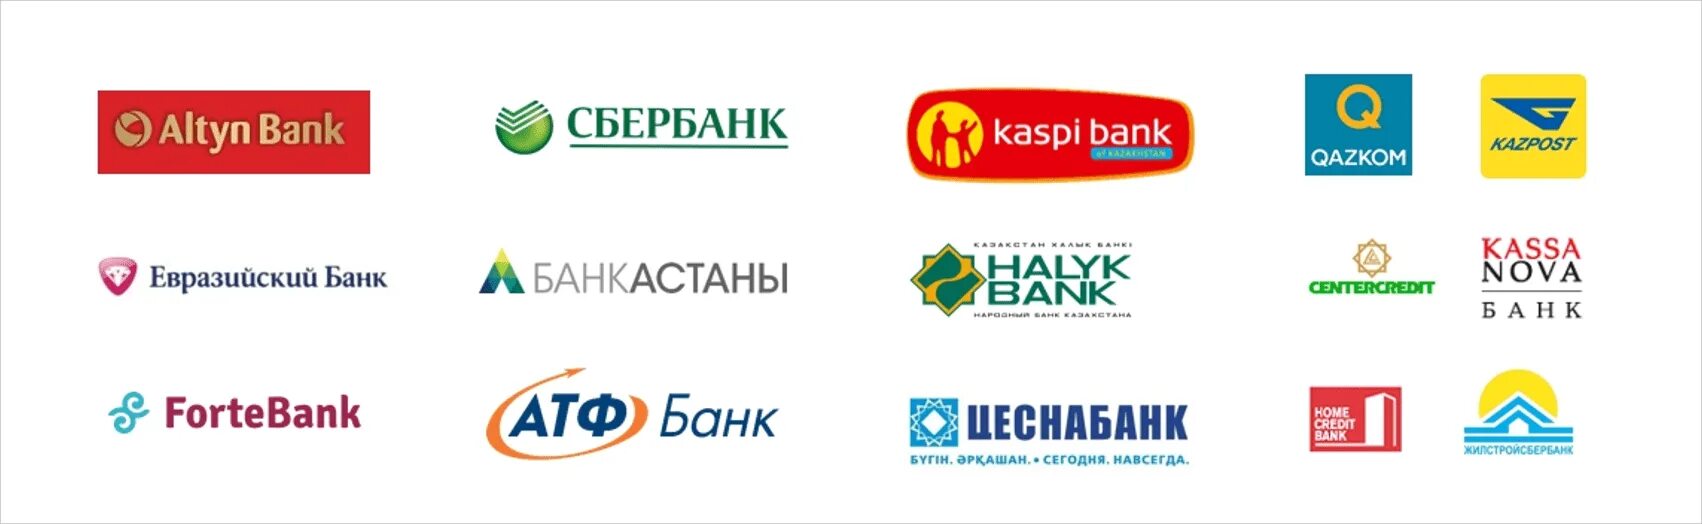 Банки Казахстана. Логотипы банков Казахстана. Коммерческие банки РК. Банк лого.